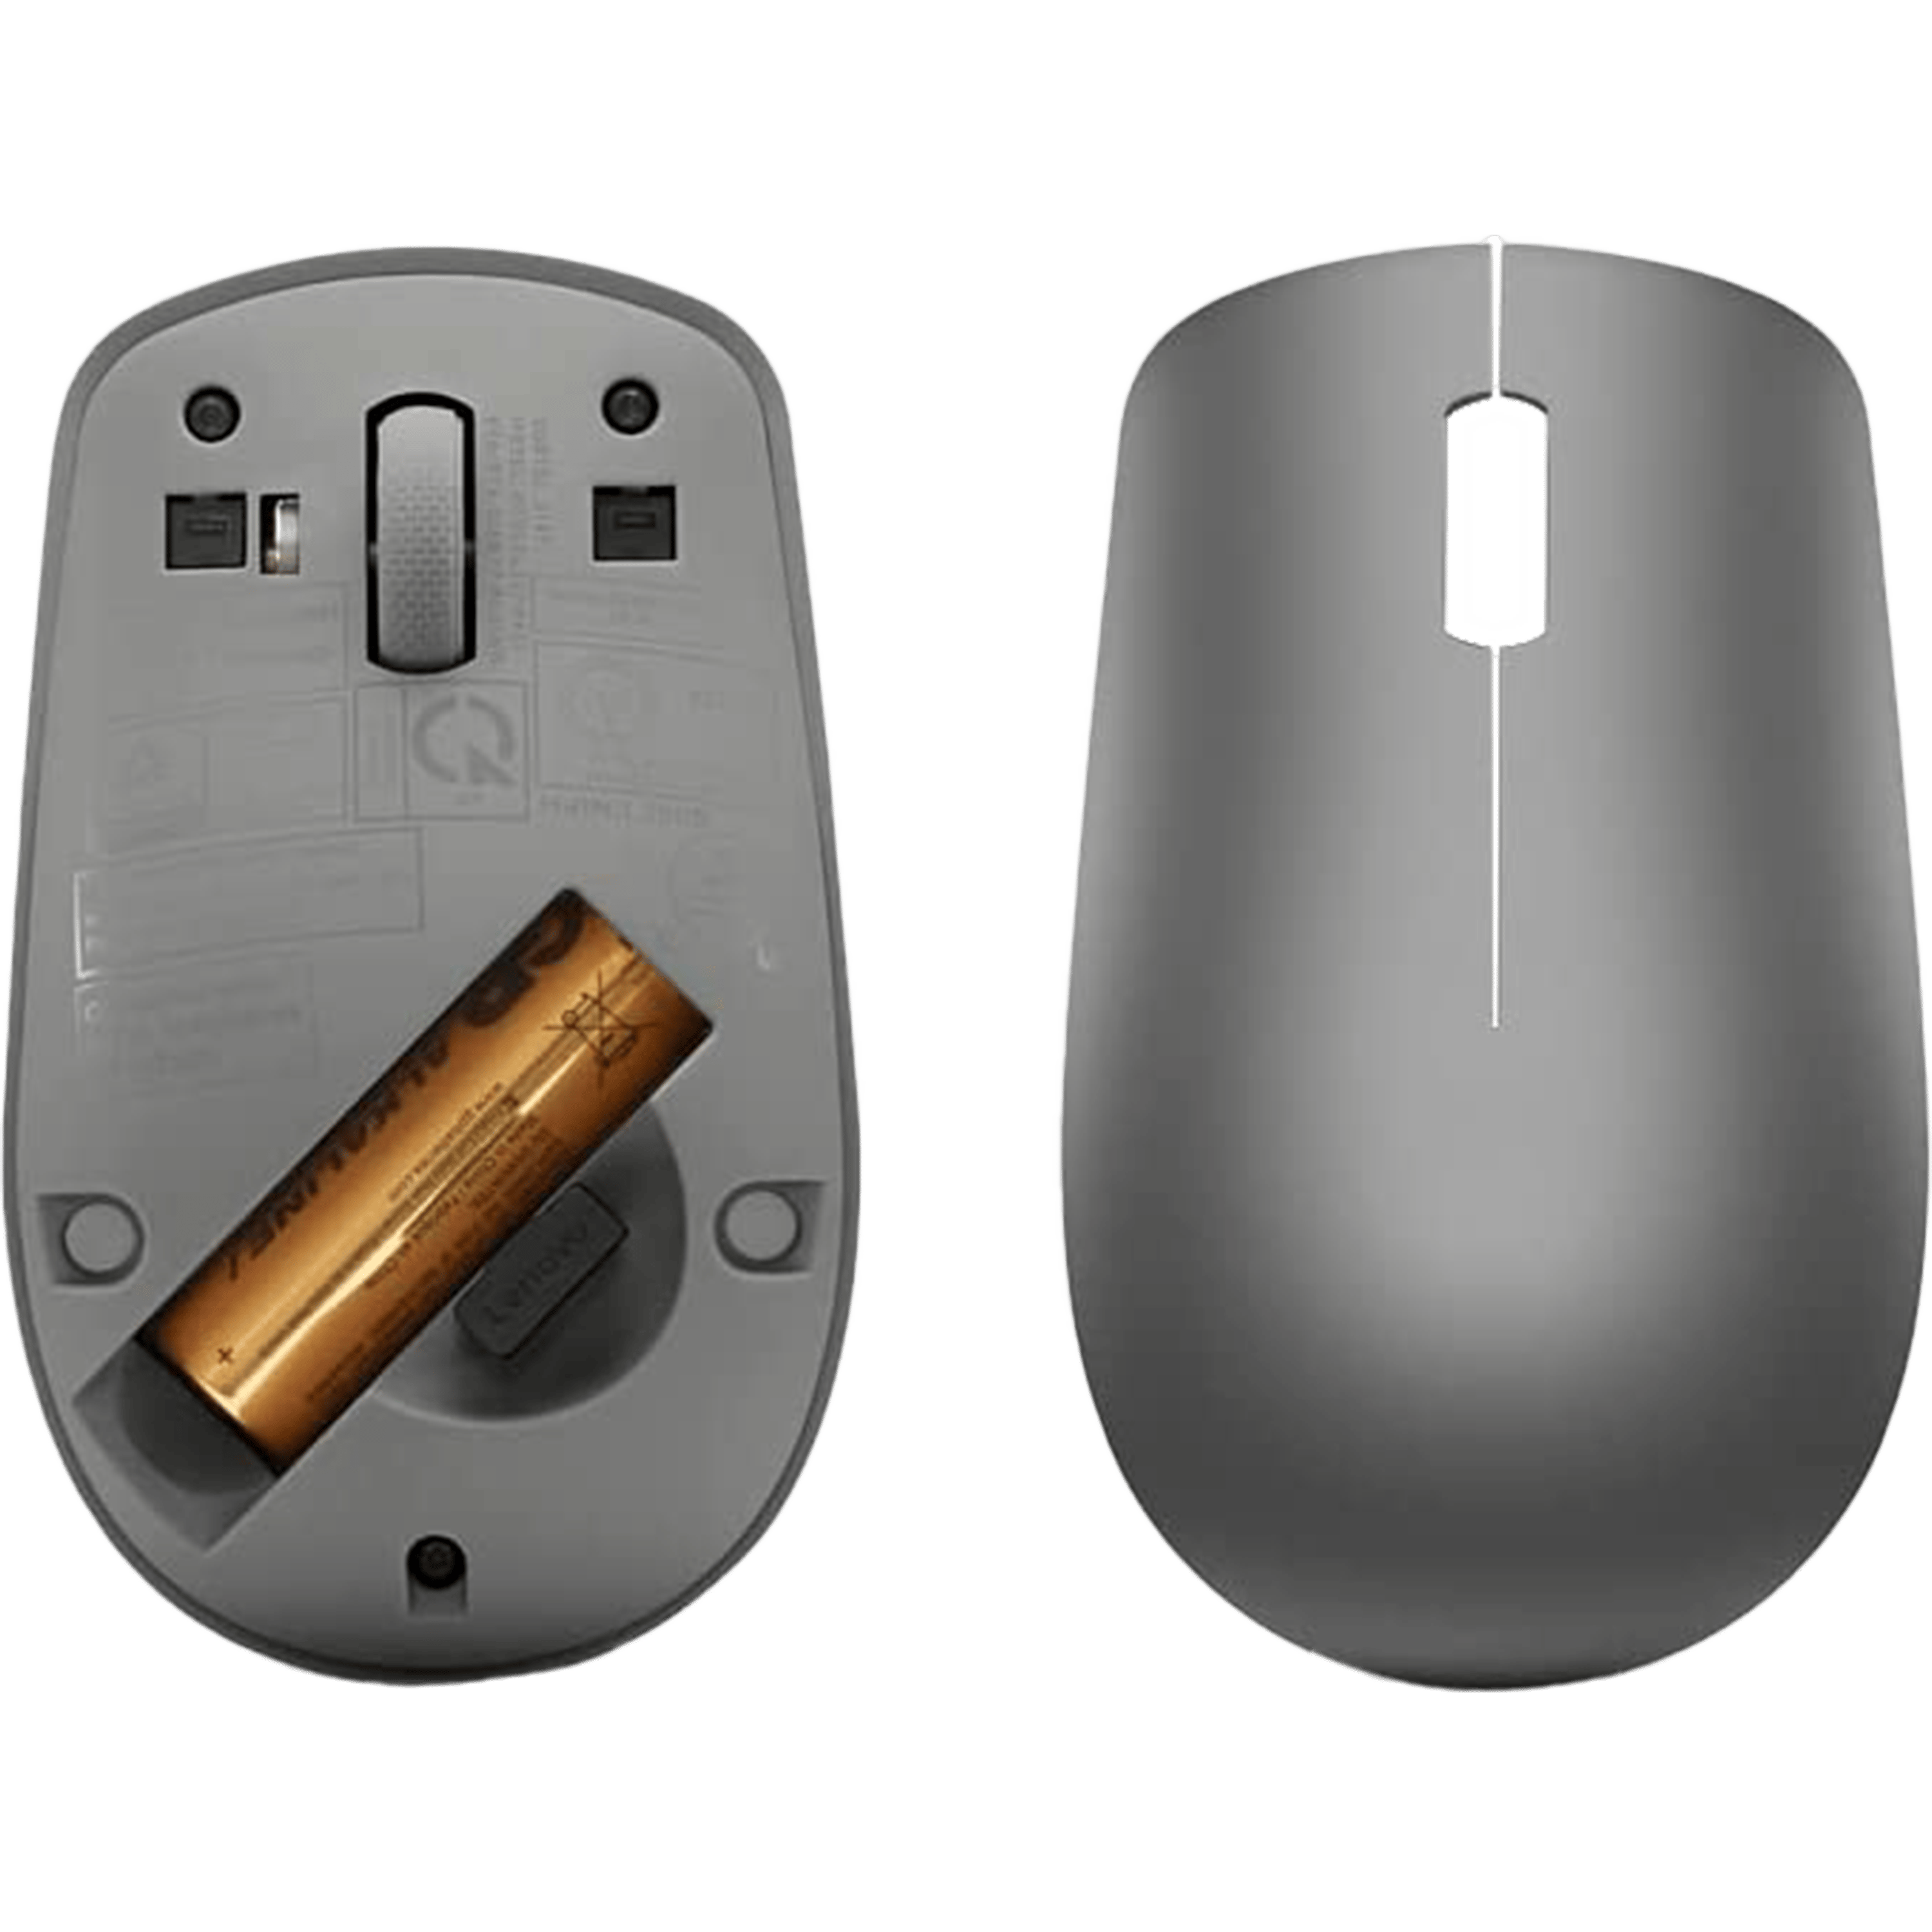 עכבר Lenovo 530 Wireless Mouse (Graphite)